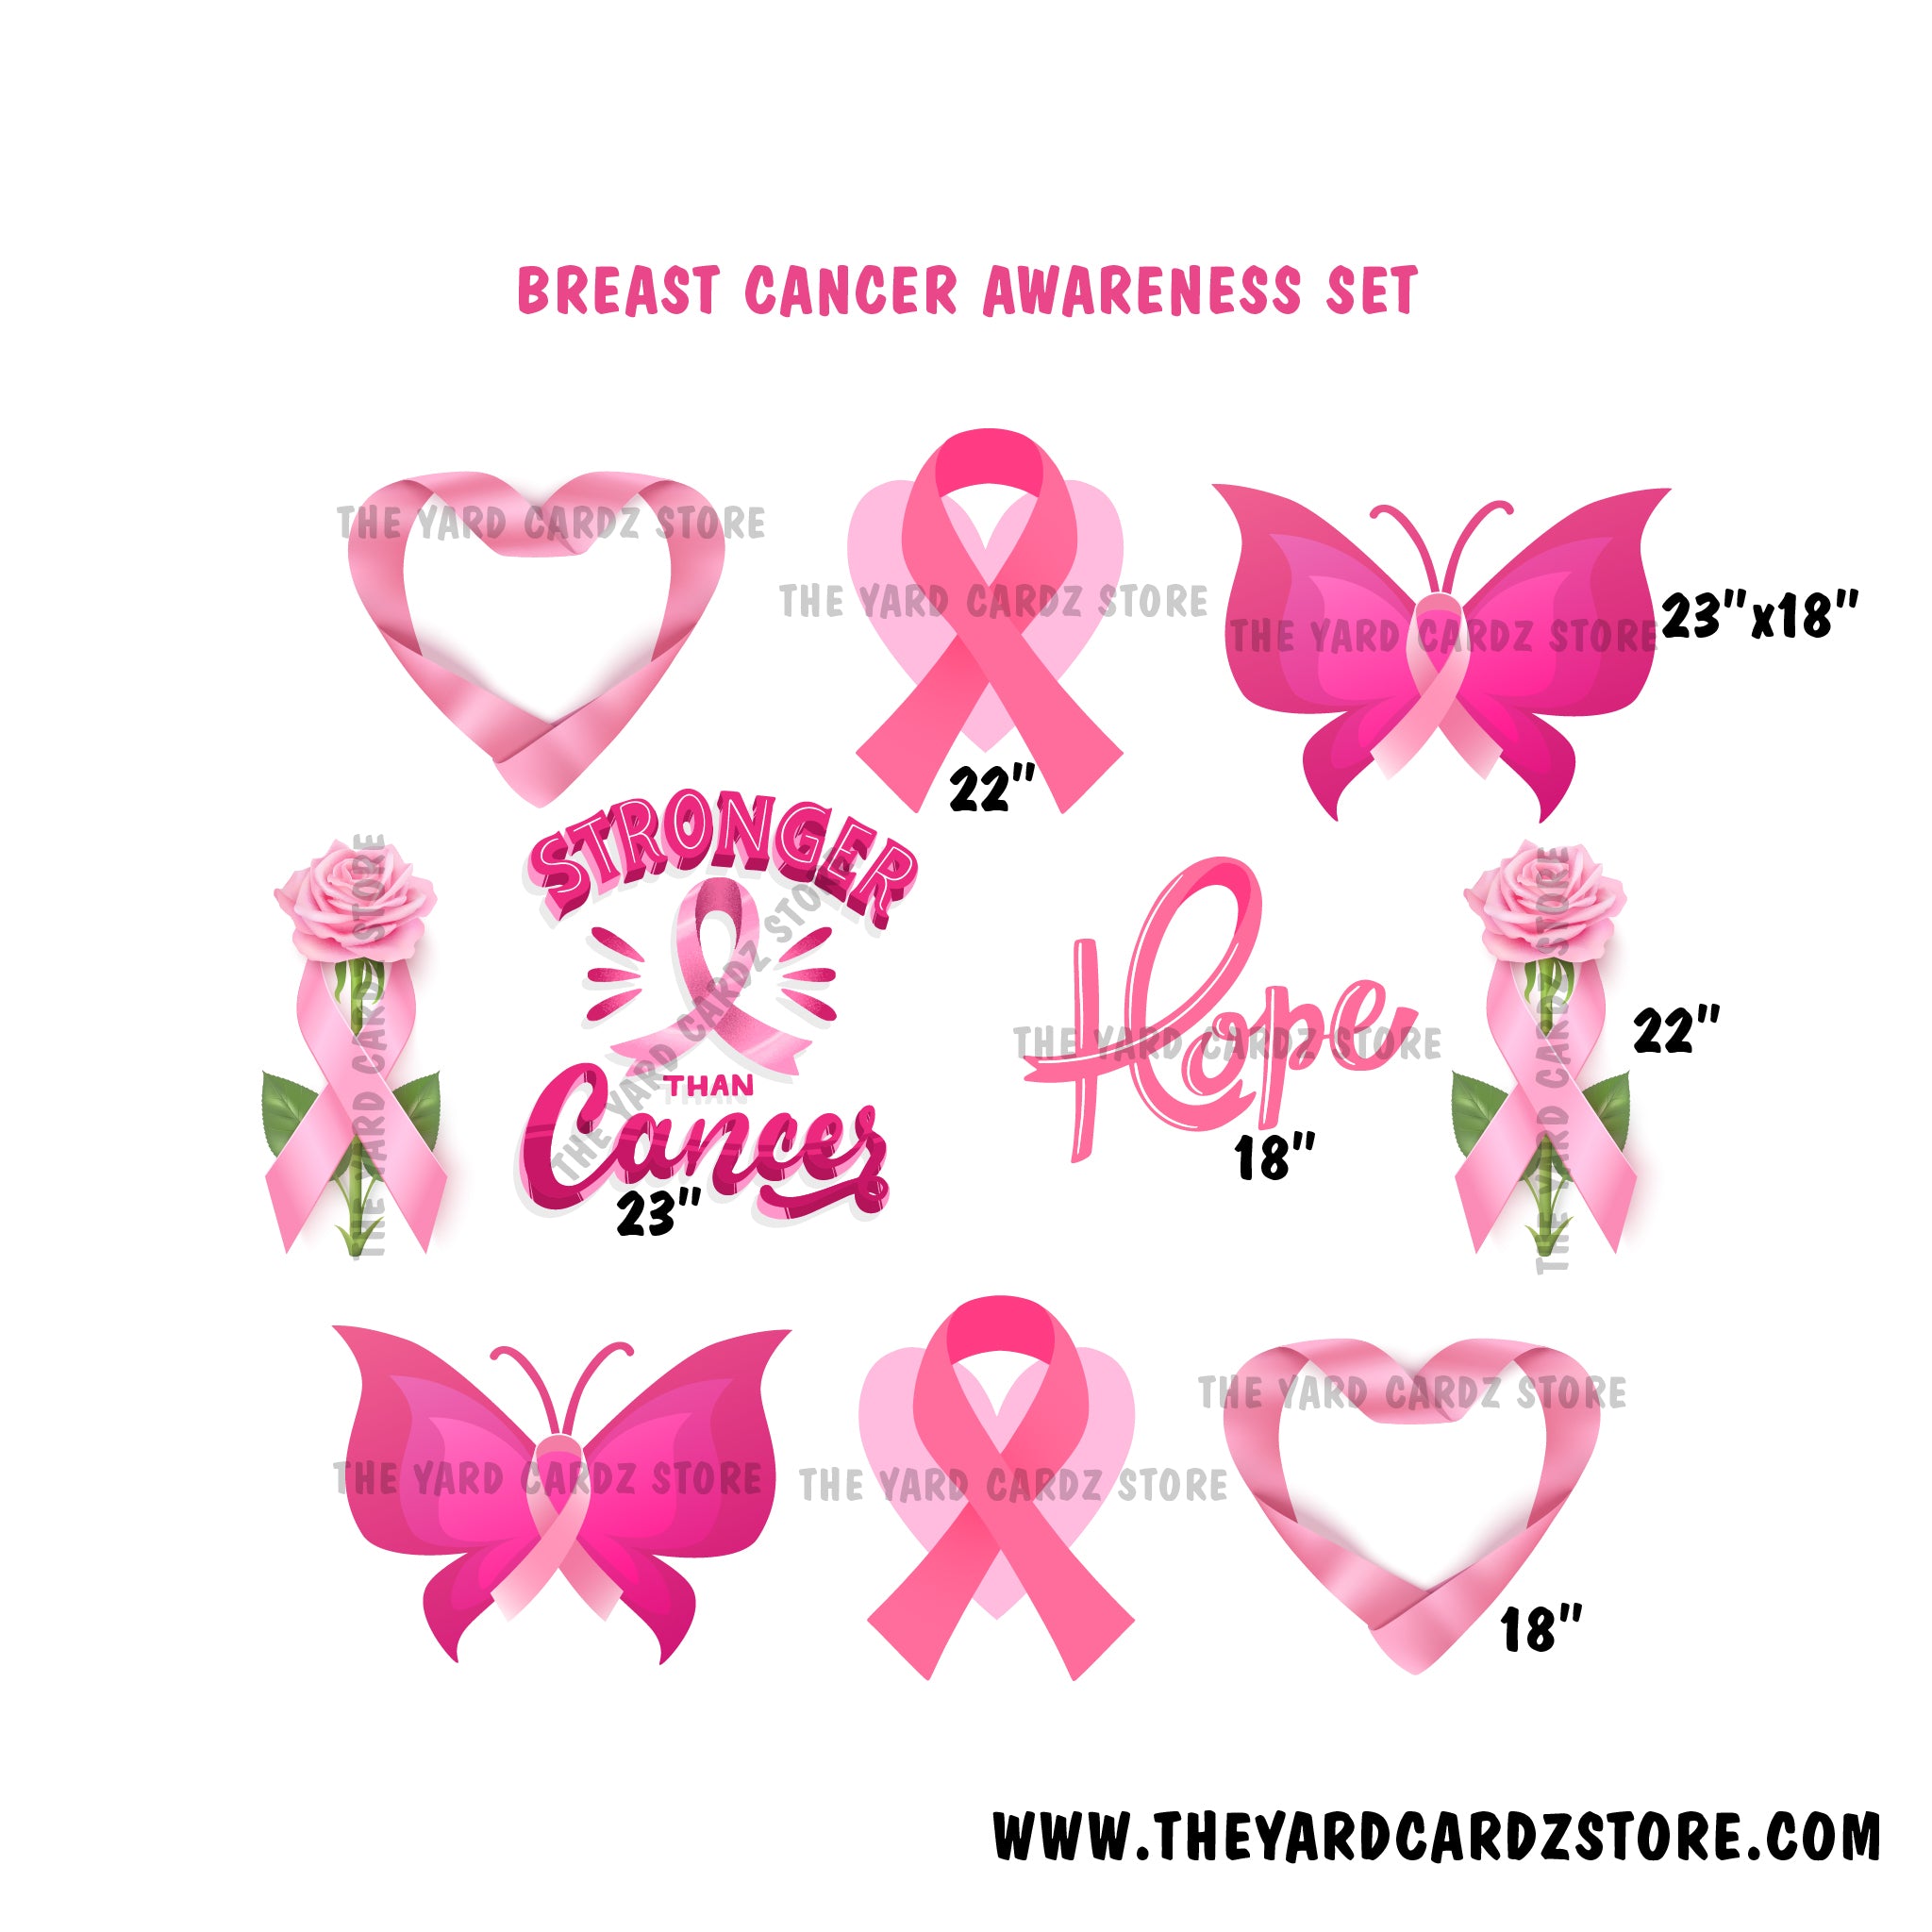 BREAST CANCER AWARENESS SET